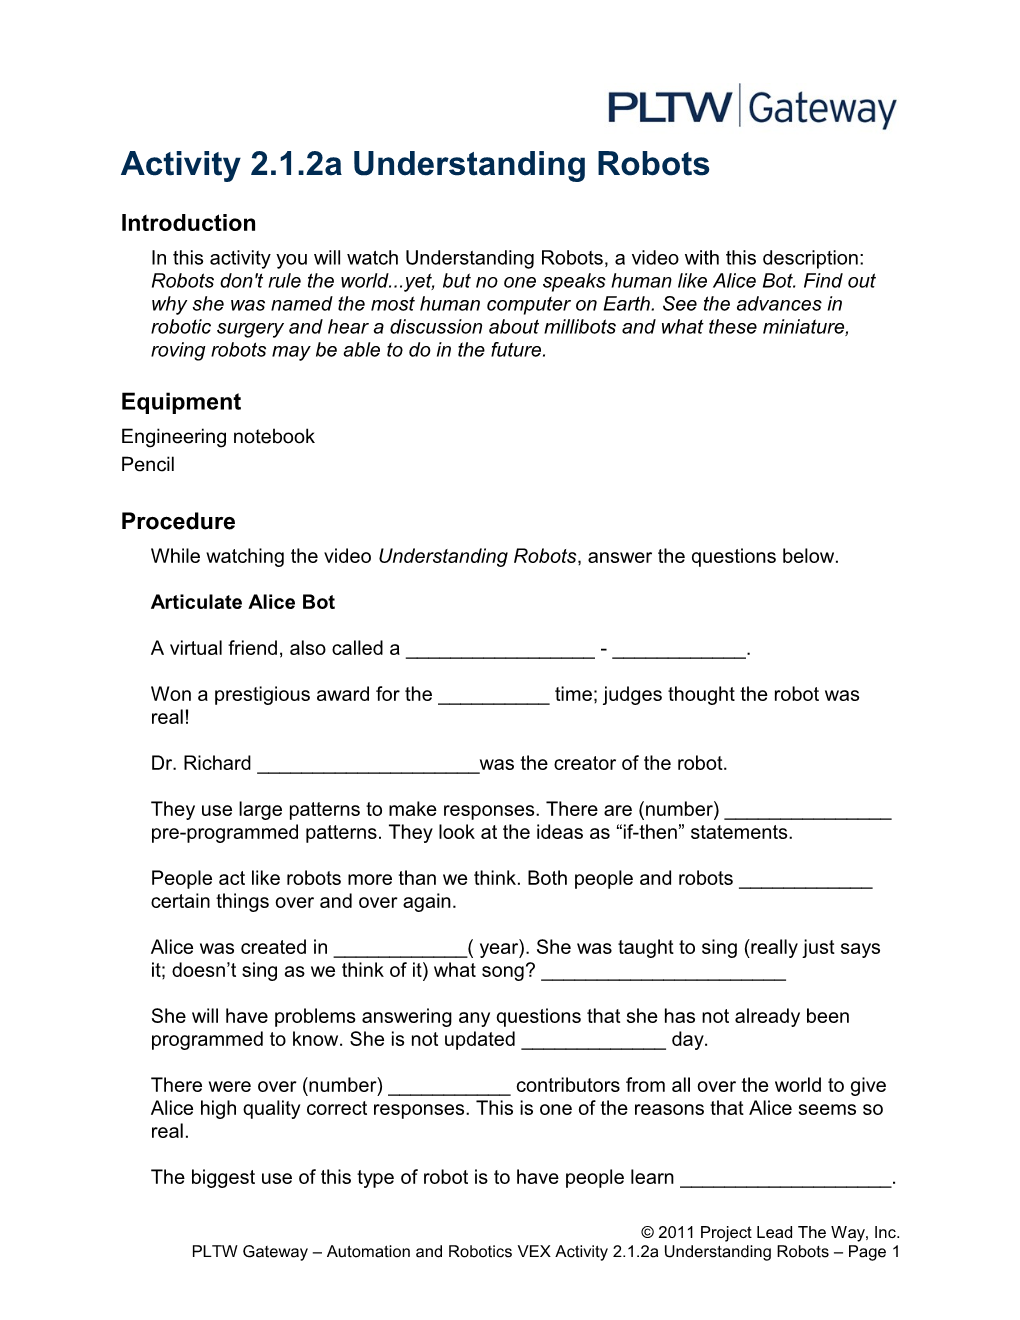 Activity 2.1.2A Understanding Robots